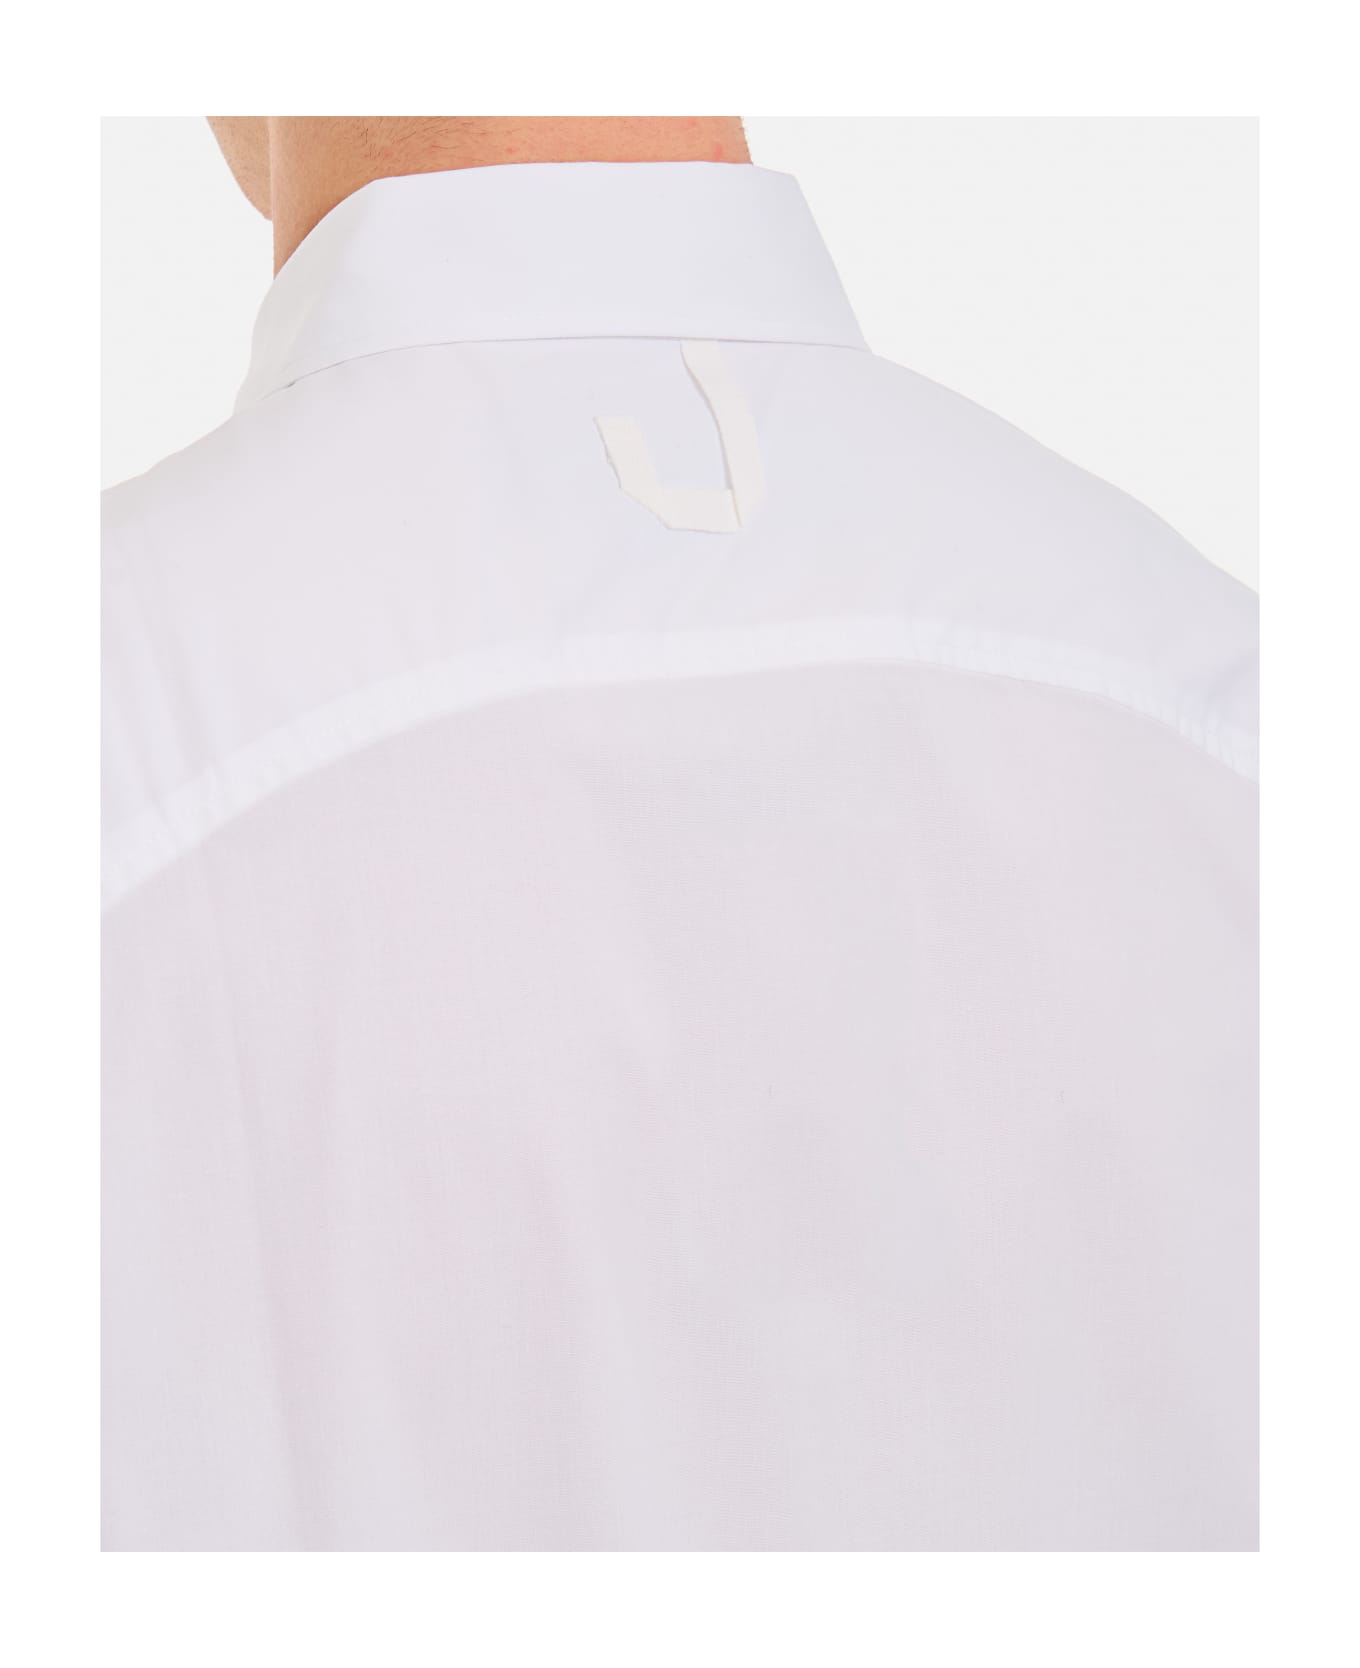 Jacquemus De Costume Shirt - White